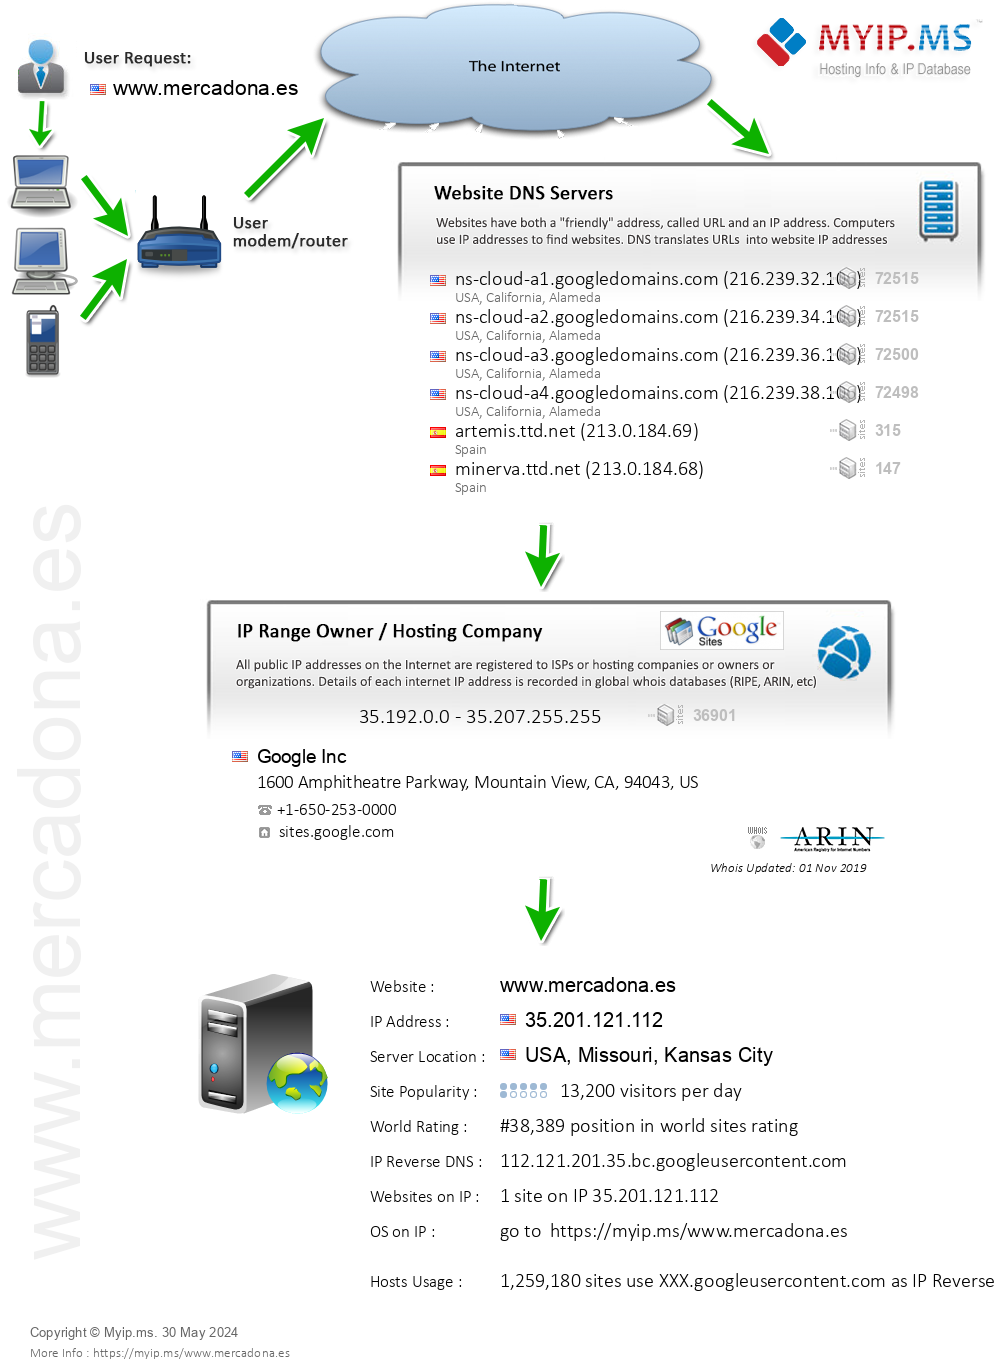 Mercadona.es - Website Hosting Visual IP Diagram